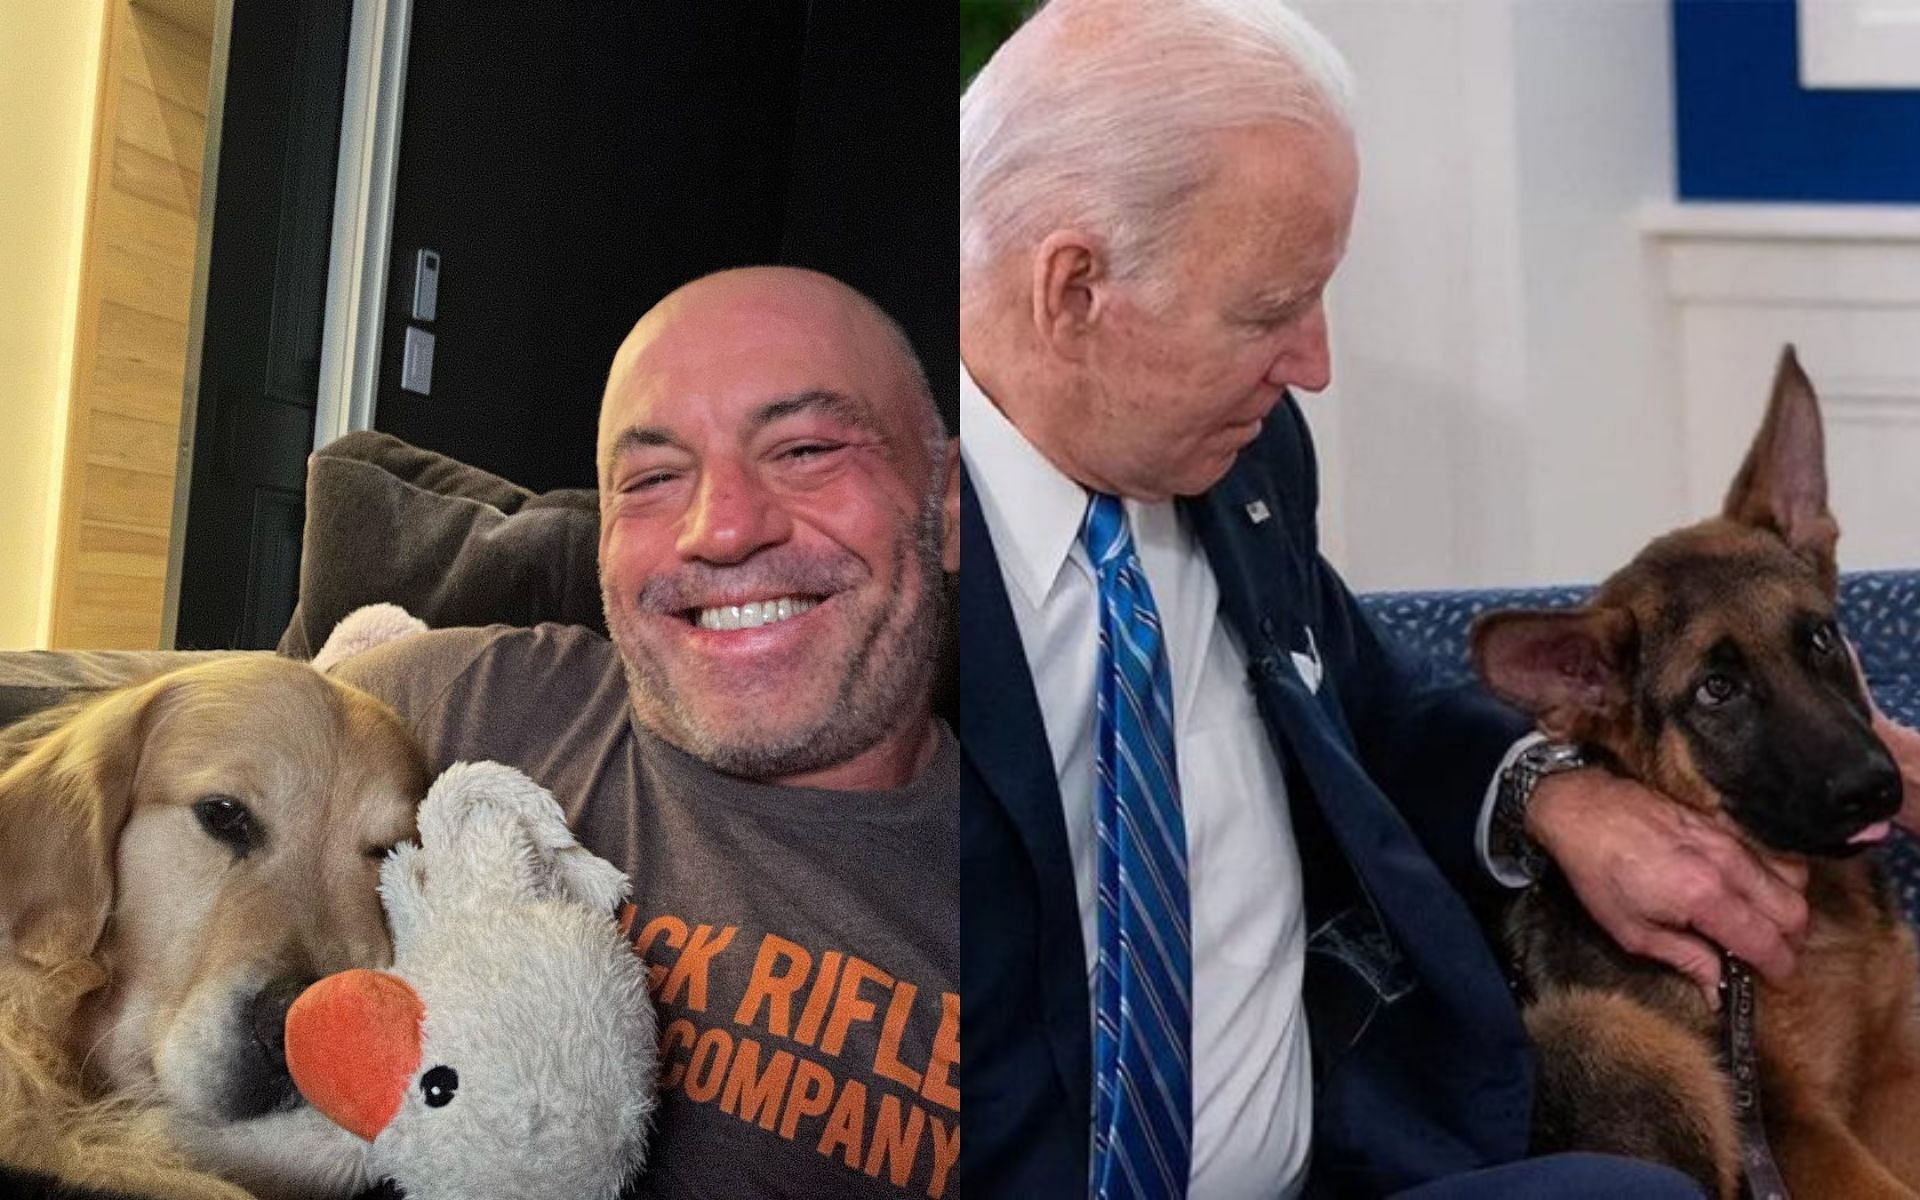 Joe Rogan with his dog (left) and Joe Biden with his dog Commander (right) (Image credits @joerogan on Instagram and @CitizenFreePres on X)